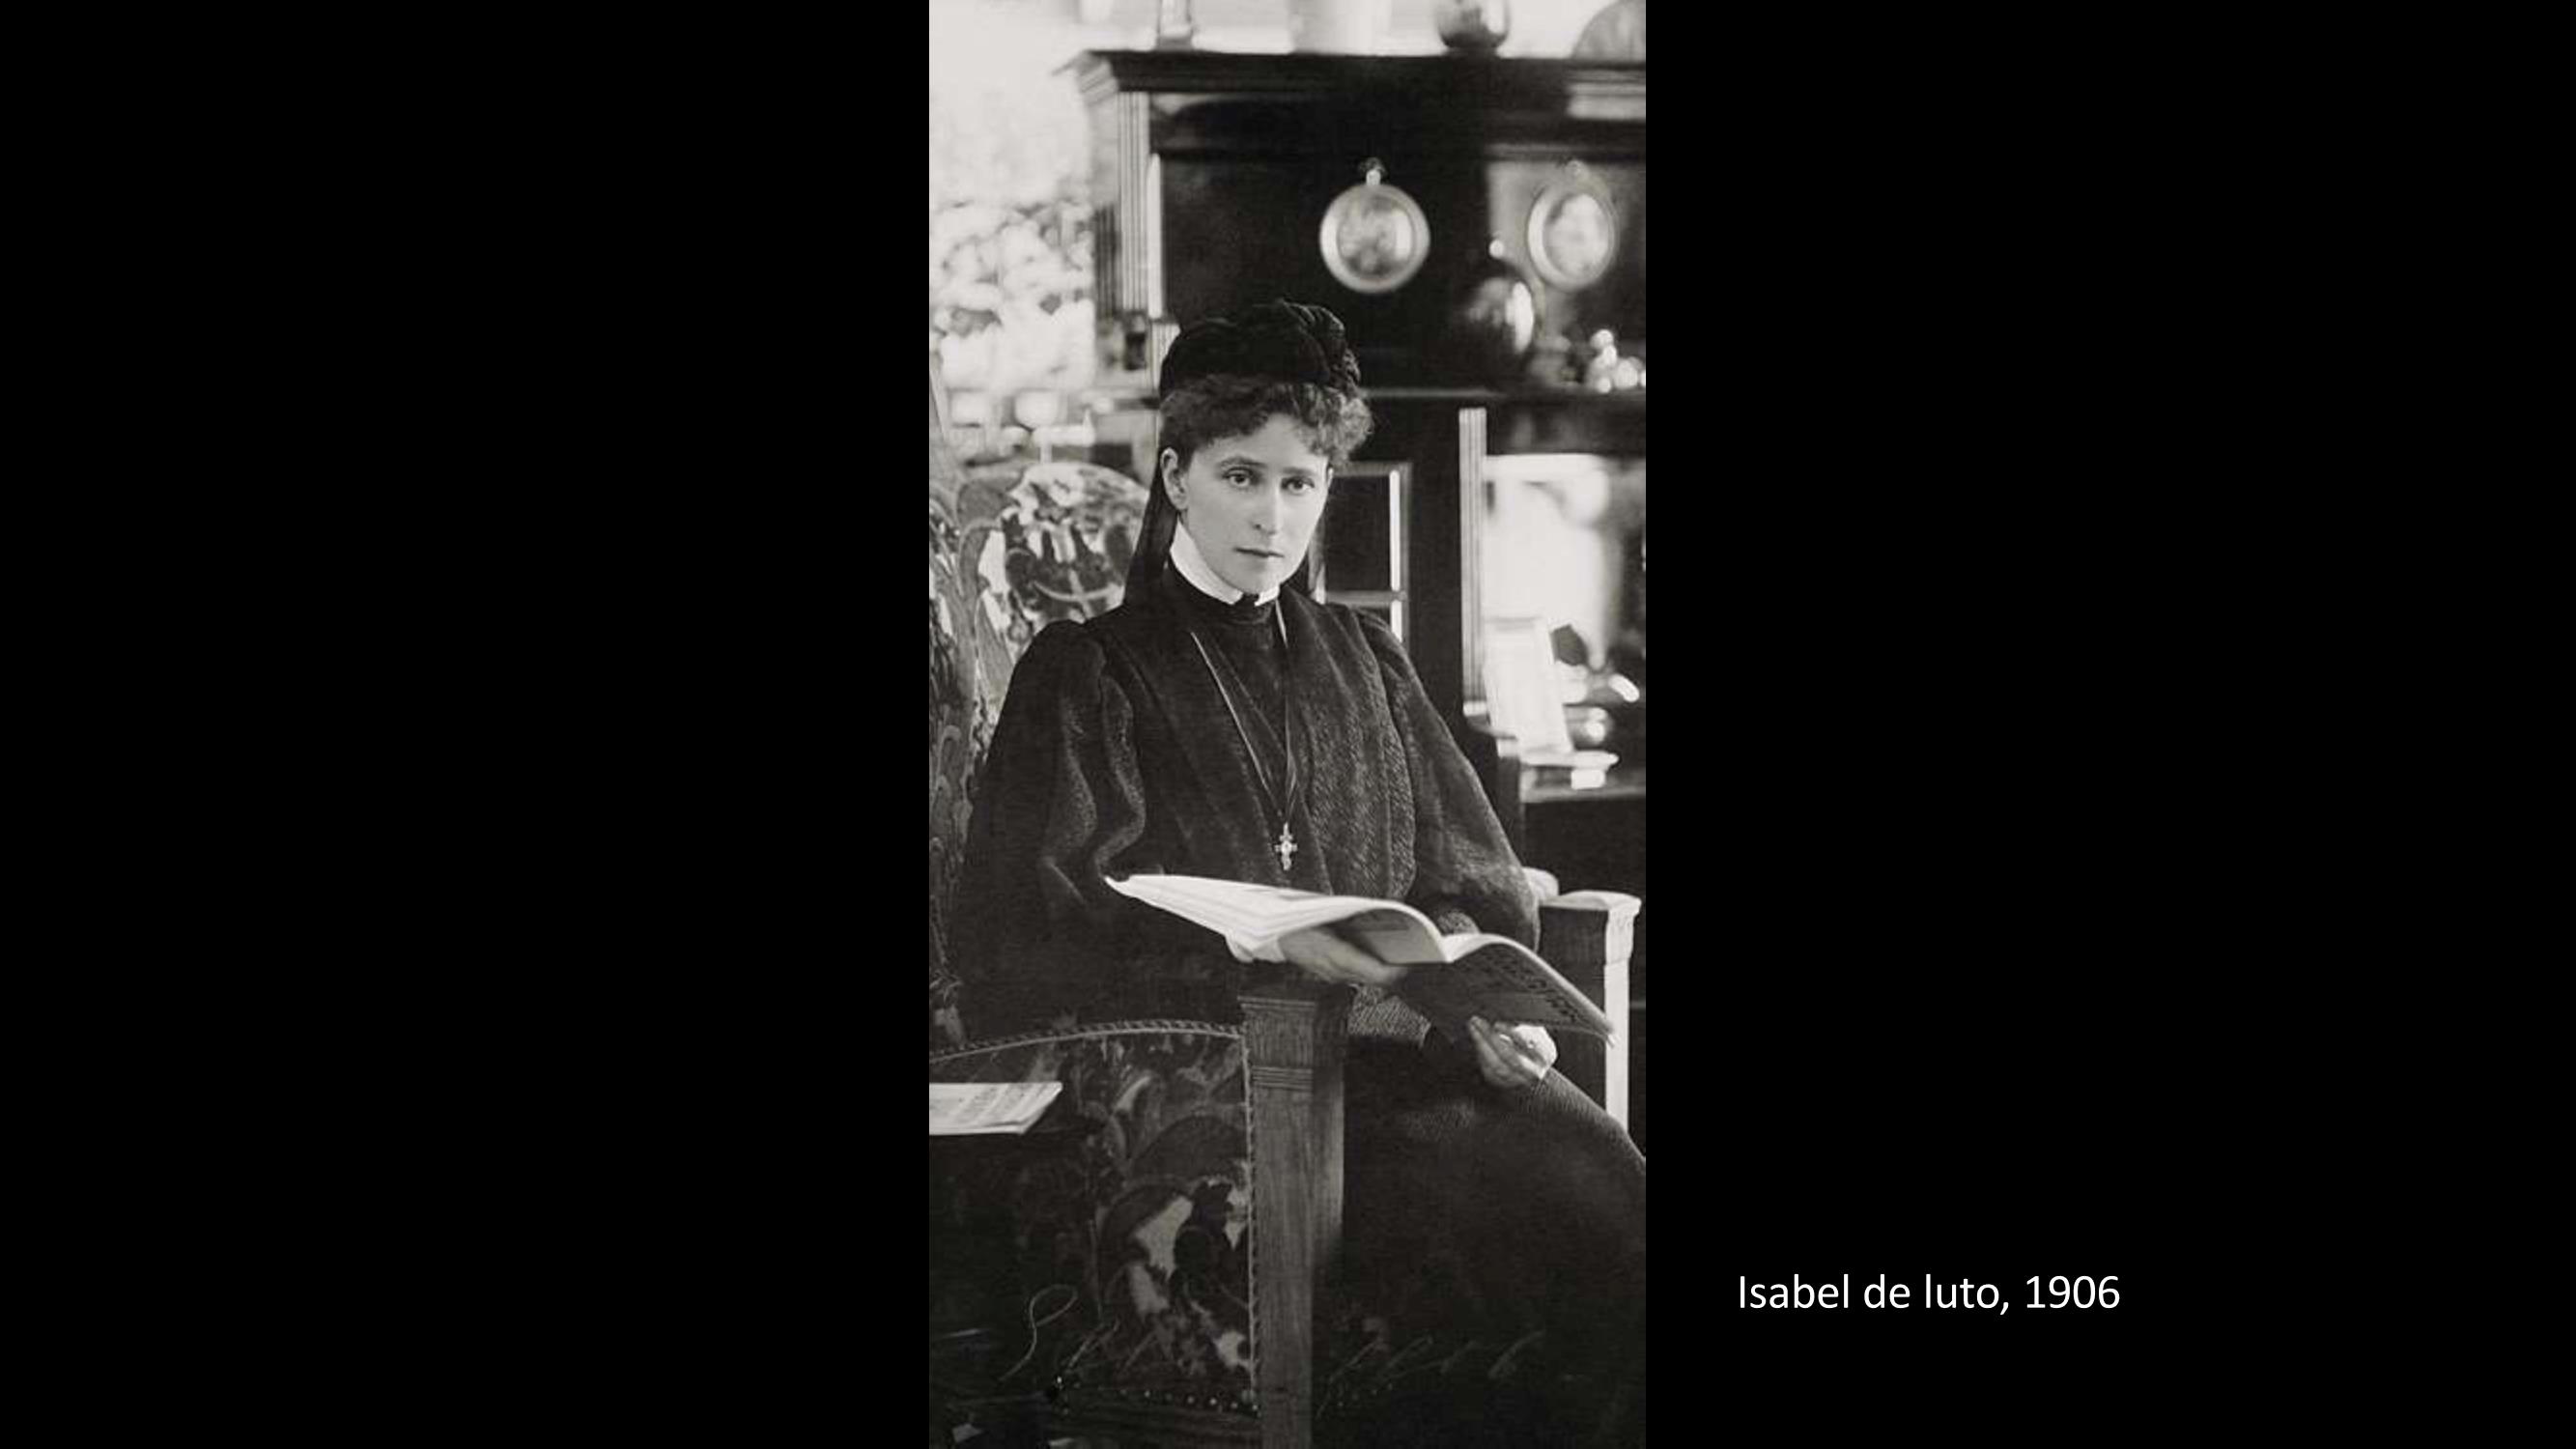 [14] Isabel de luto, 1906